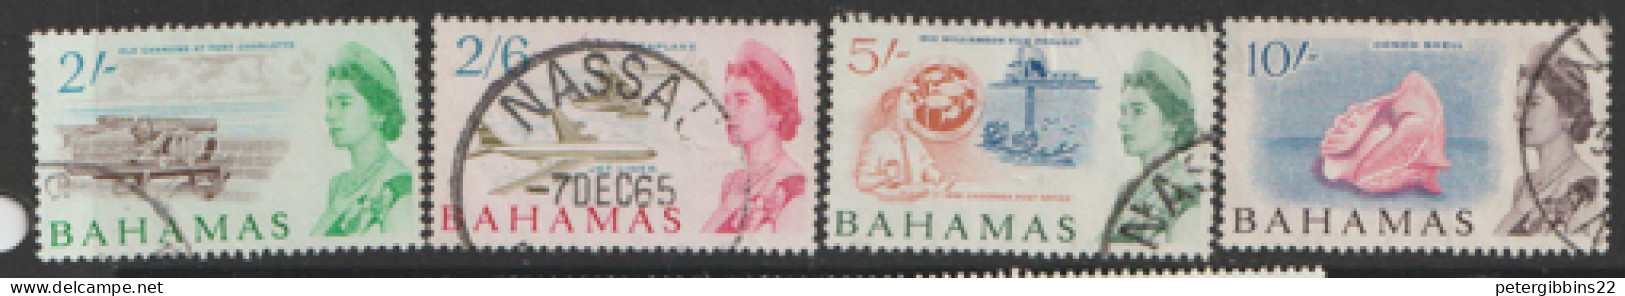 Bahamas 1965  SG 257-60  Fine Used - 1963-1973 Autonomie Interne